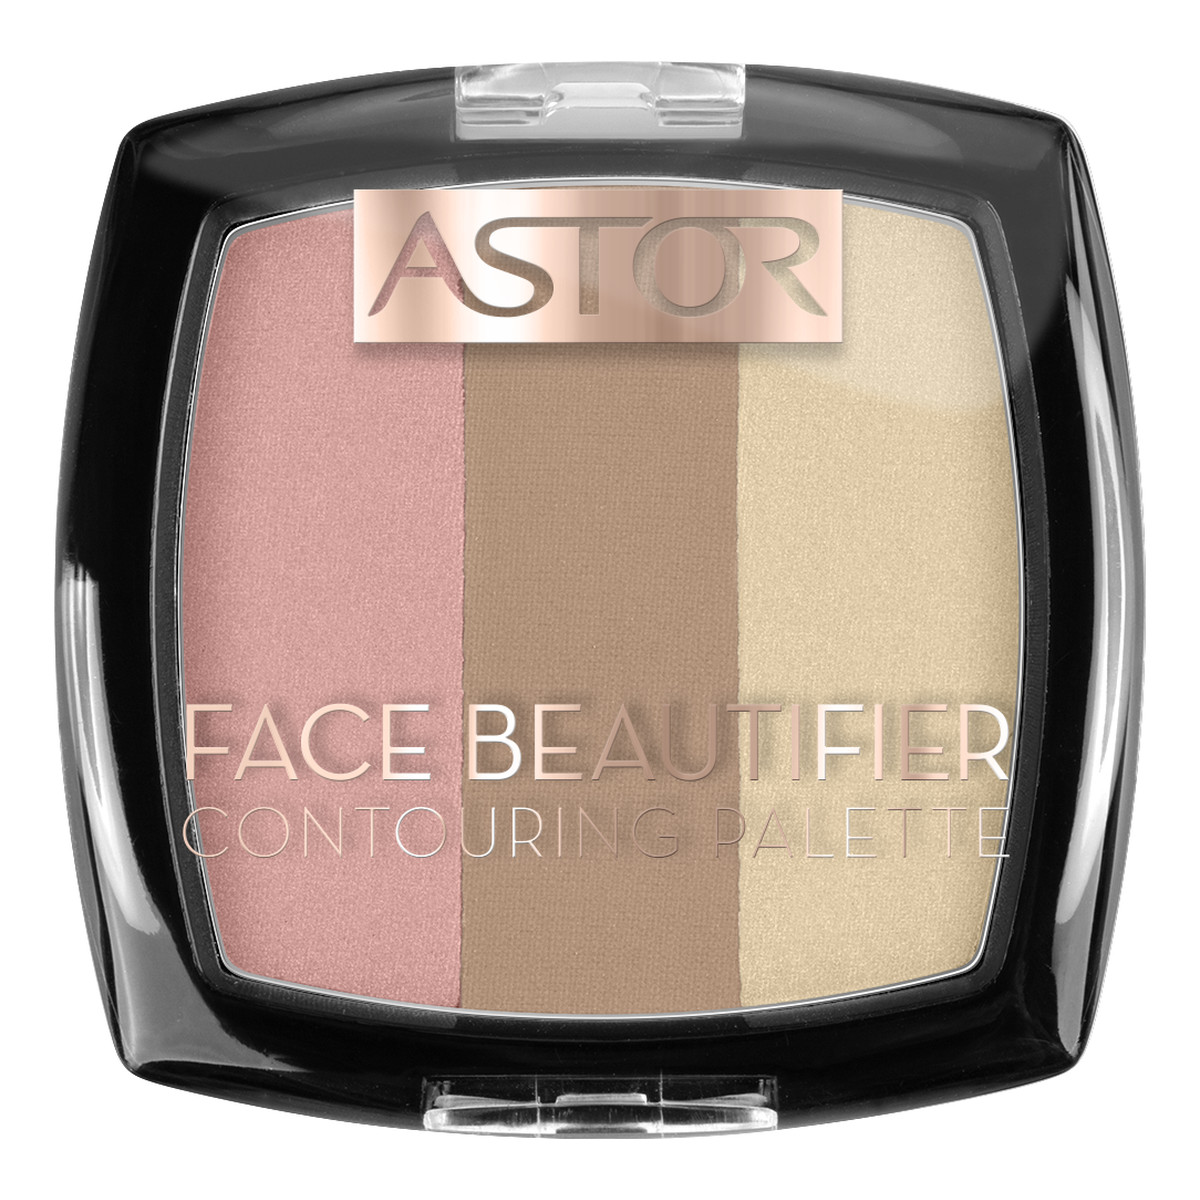 Astor Face Beautifier Contouring Palette Paletka do konturowania twarzy 9g